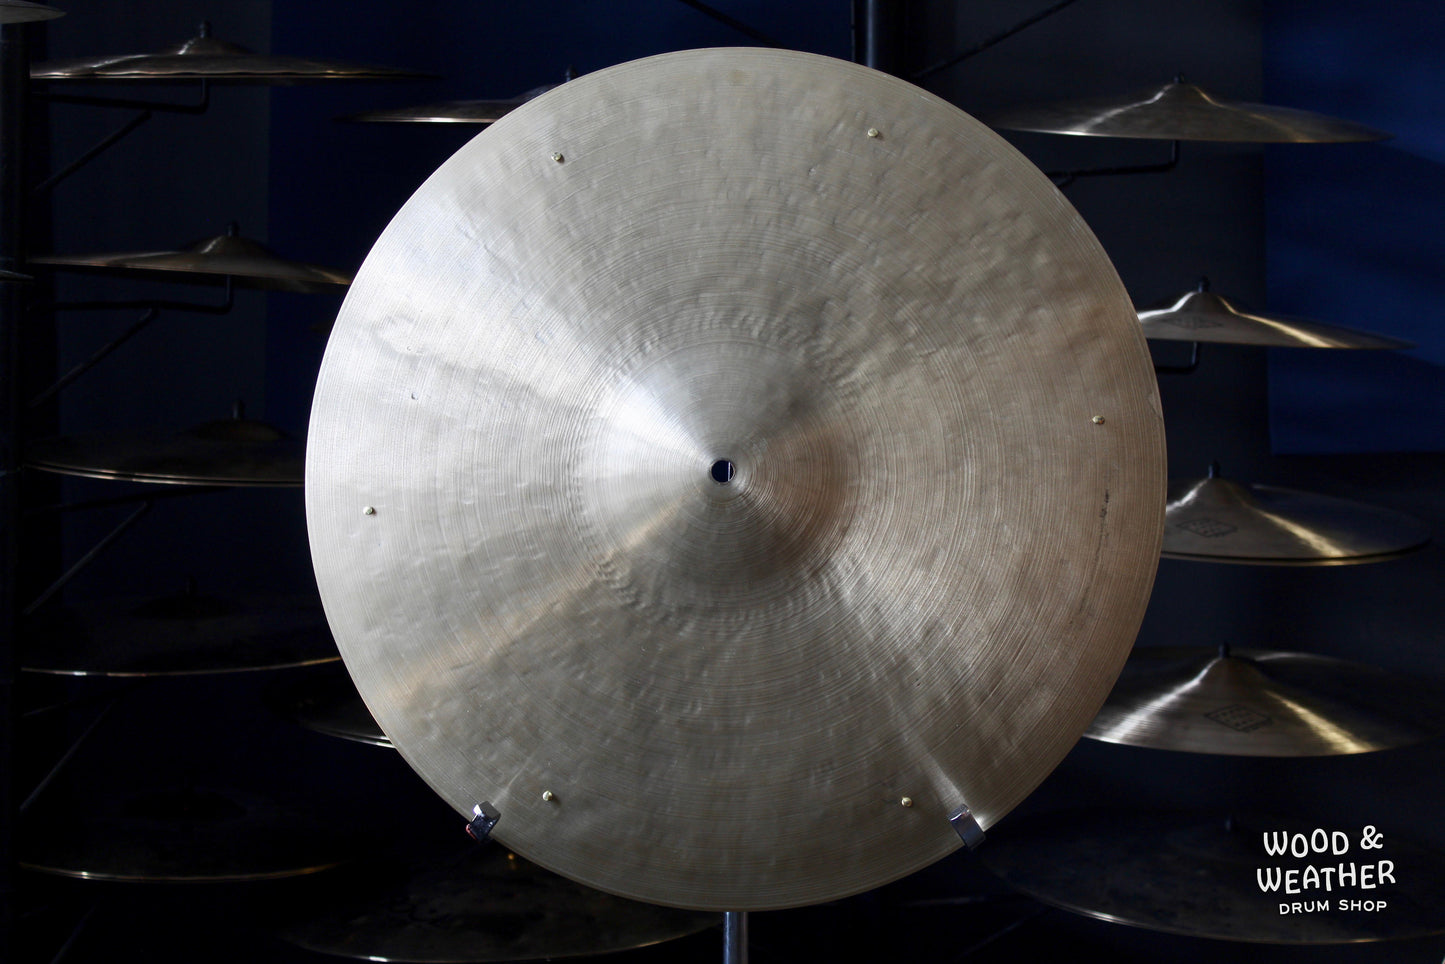 Mongiello Cymbals 20" Prestige Series Type III Eric Binder Signature Ride Cymbal w/ Rivets 2042g